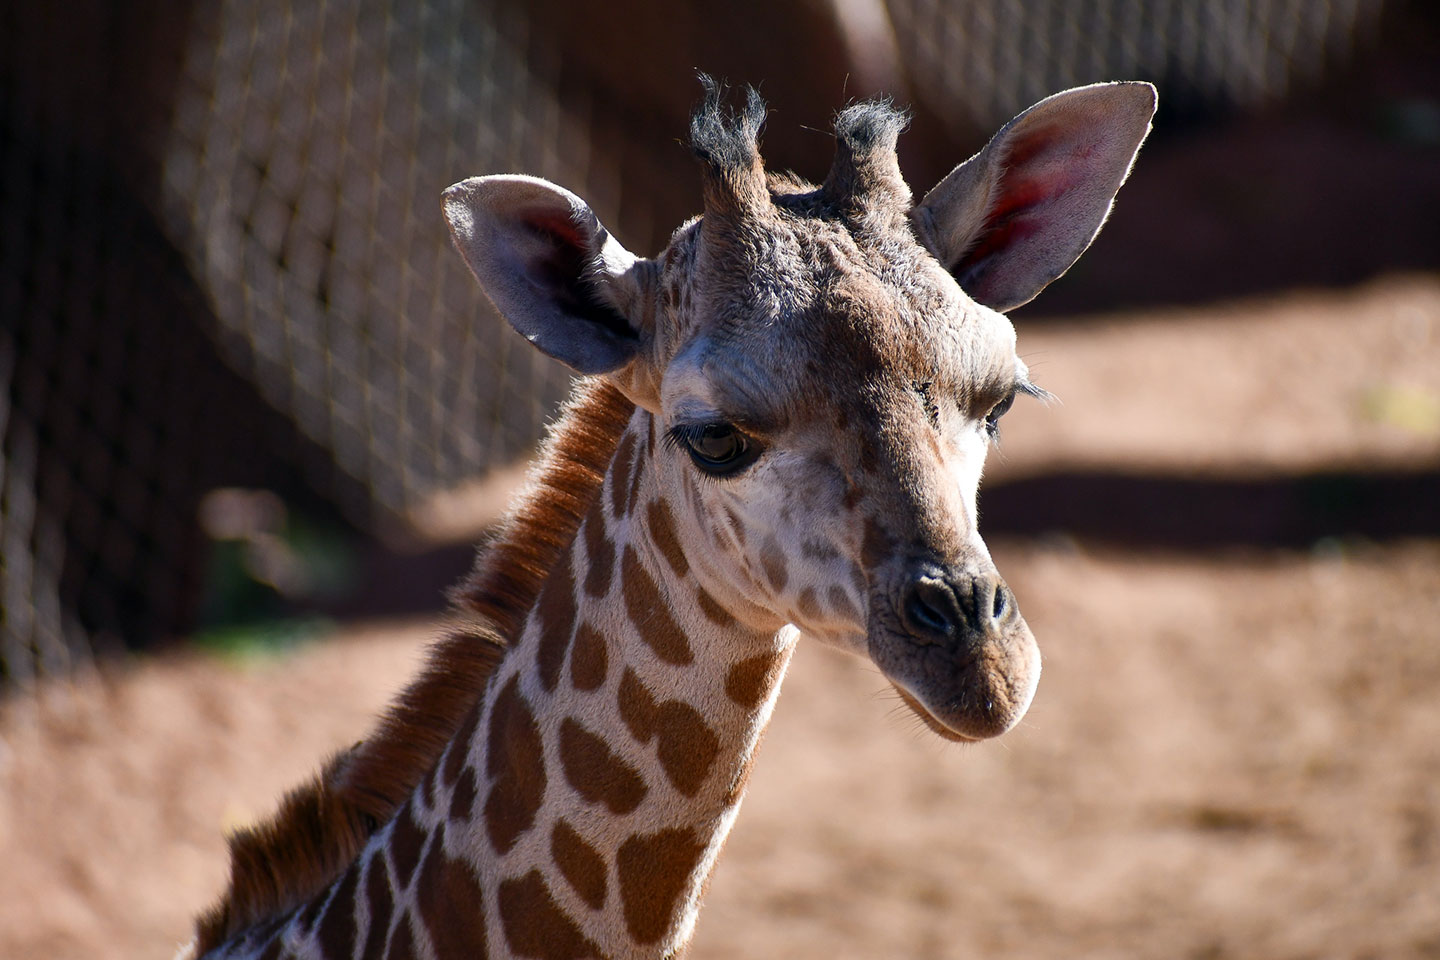 Wednesday, newest reticulated giraffe calf at Cheyenne Mountain Zoo